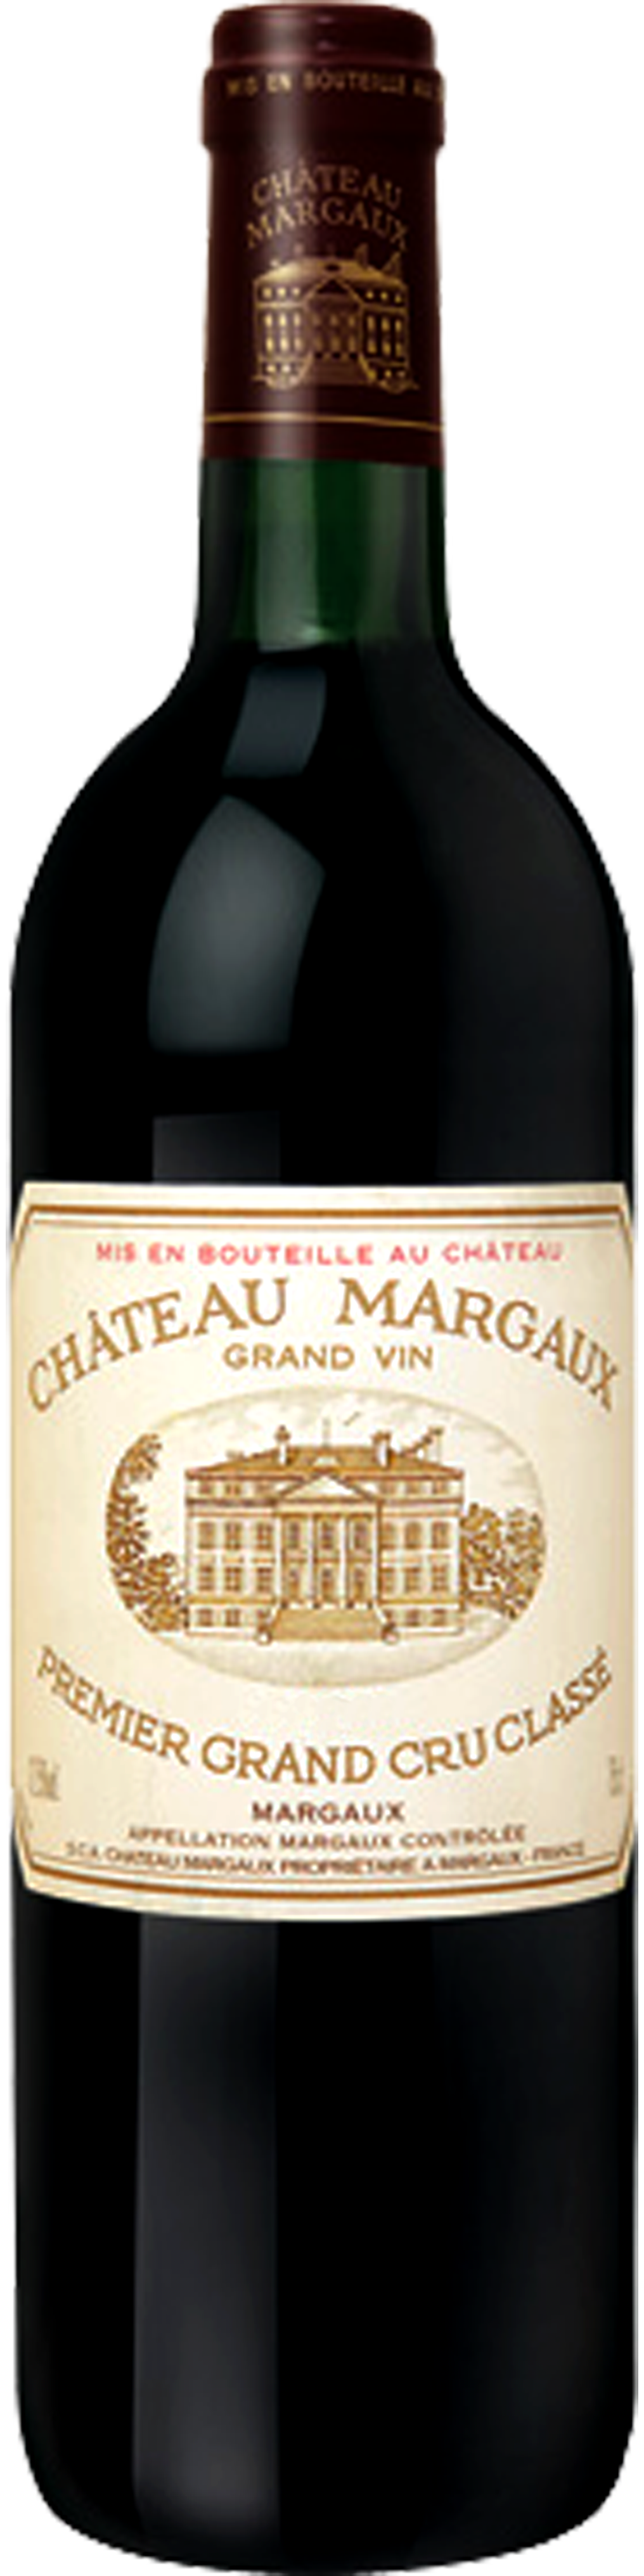 Bottle shot of 1996 Château Margaux, 1er Cru Margaux